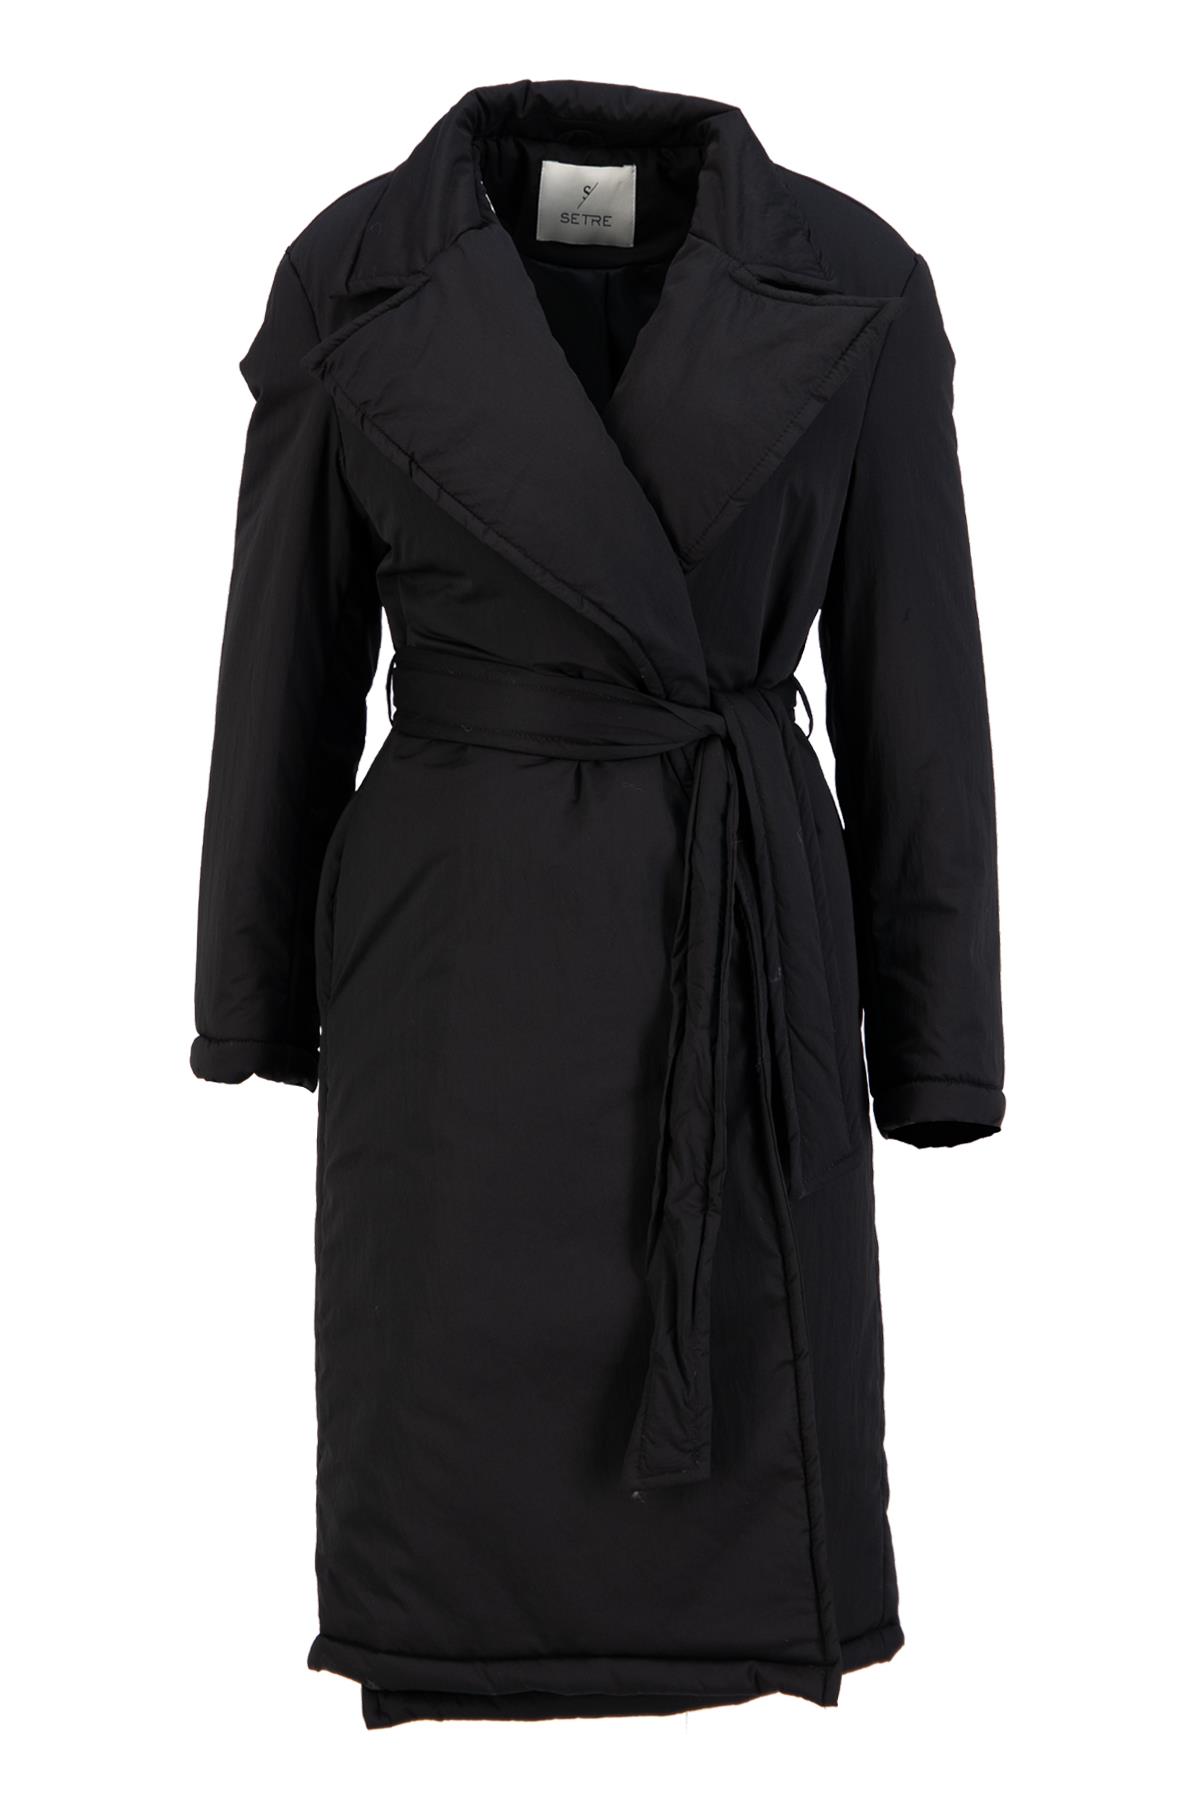 A wholesale clothing model wears Coat - Black, Turkish wholesale Coat of Setre